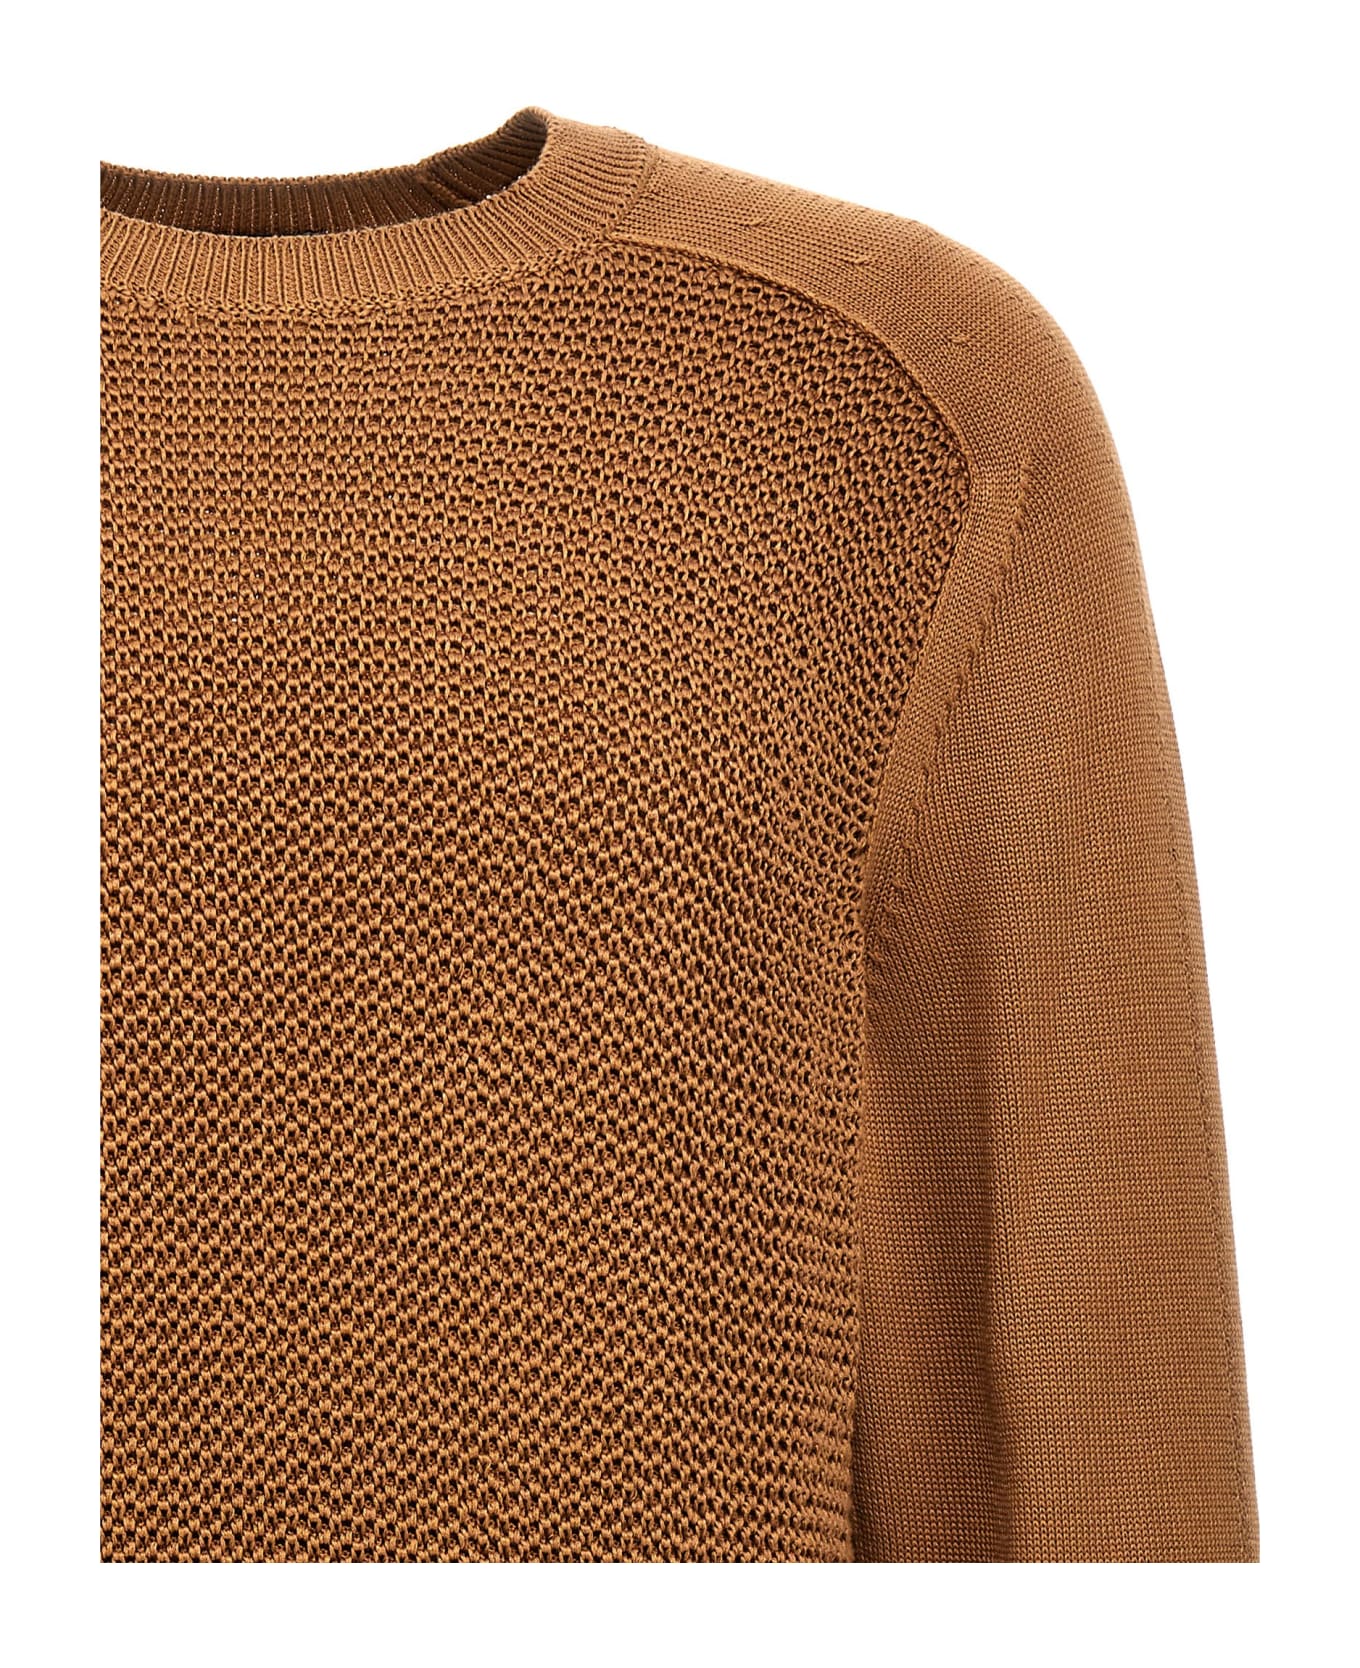 Zegna Waffle Stitch Sweater - Brown